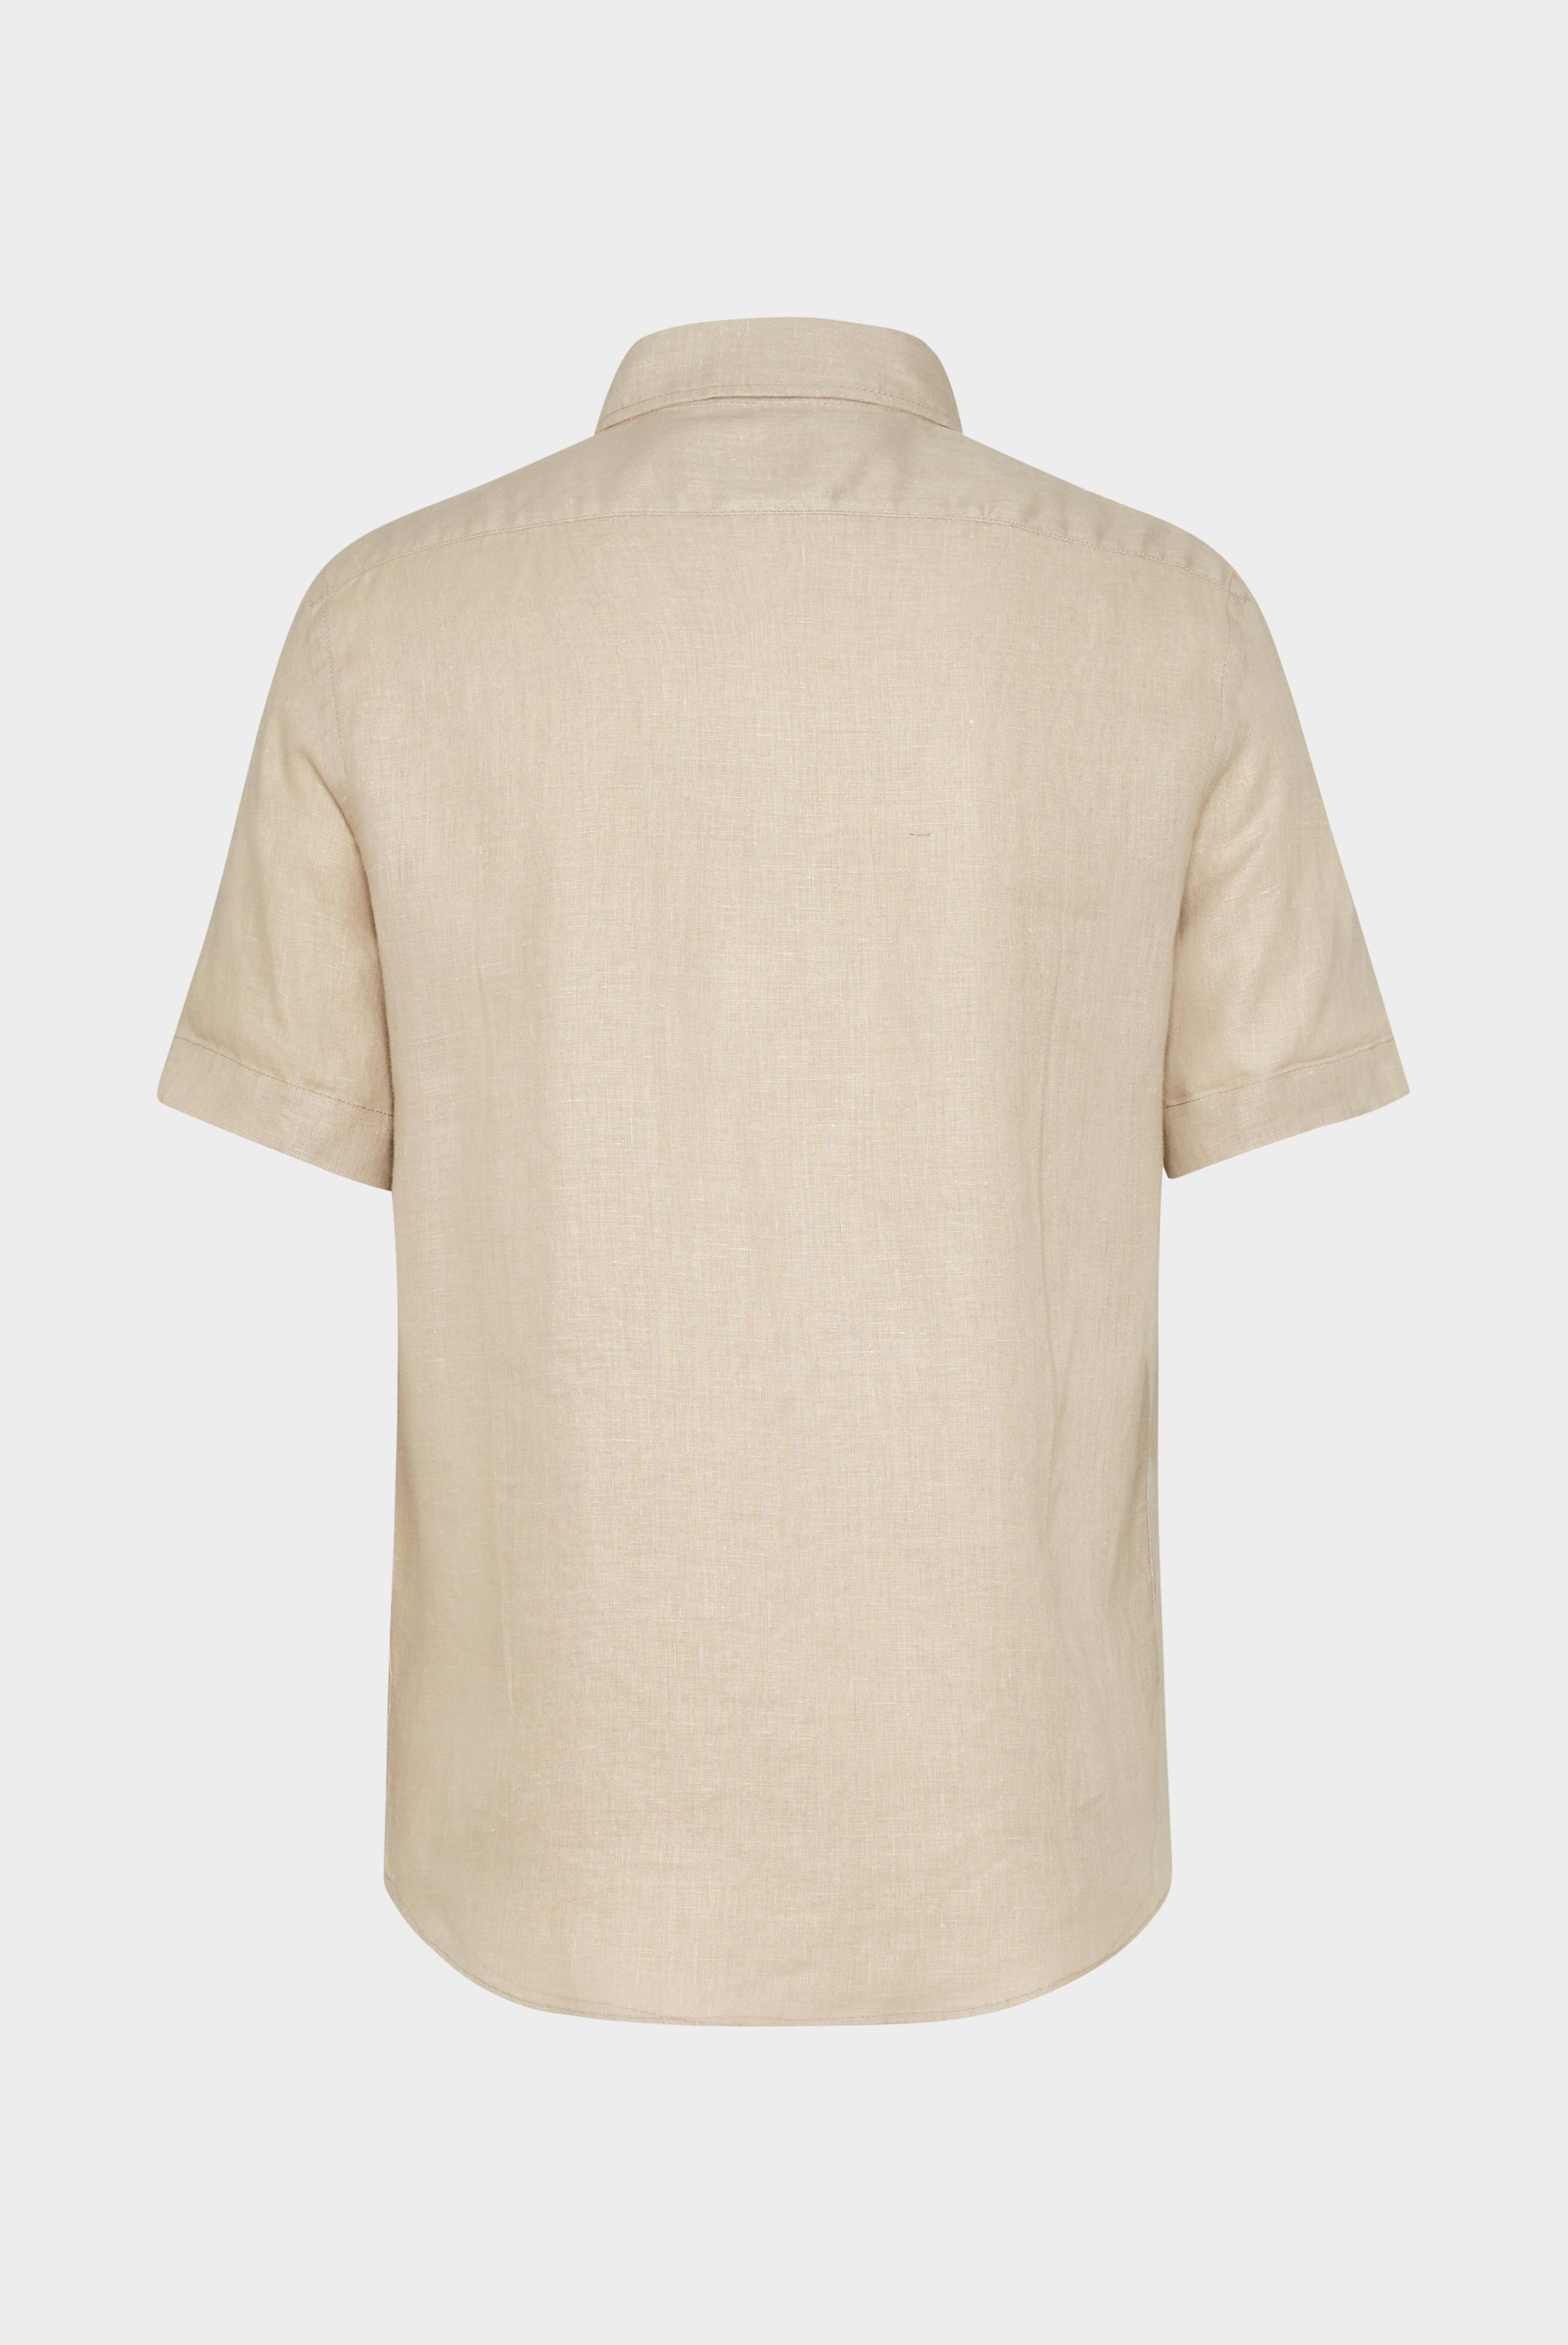 Kurzarm Hemden+Kurzarm-Hemd aus Leinen in kastiger Passform+20.2035.P8.150555.130.38